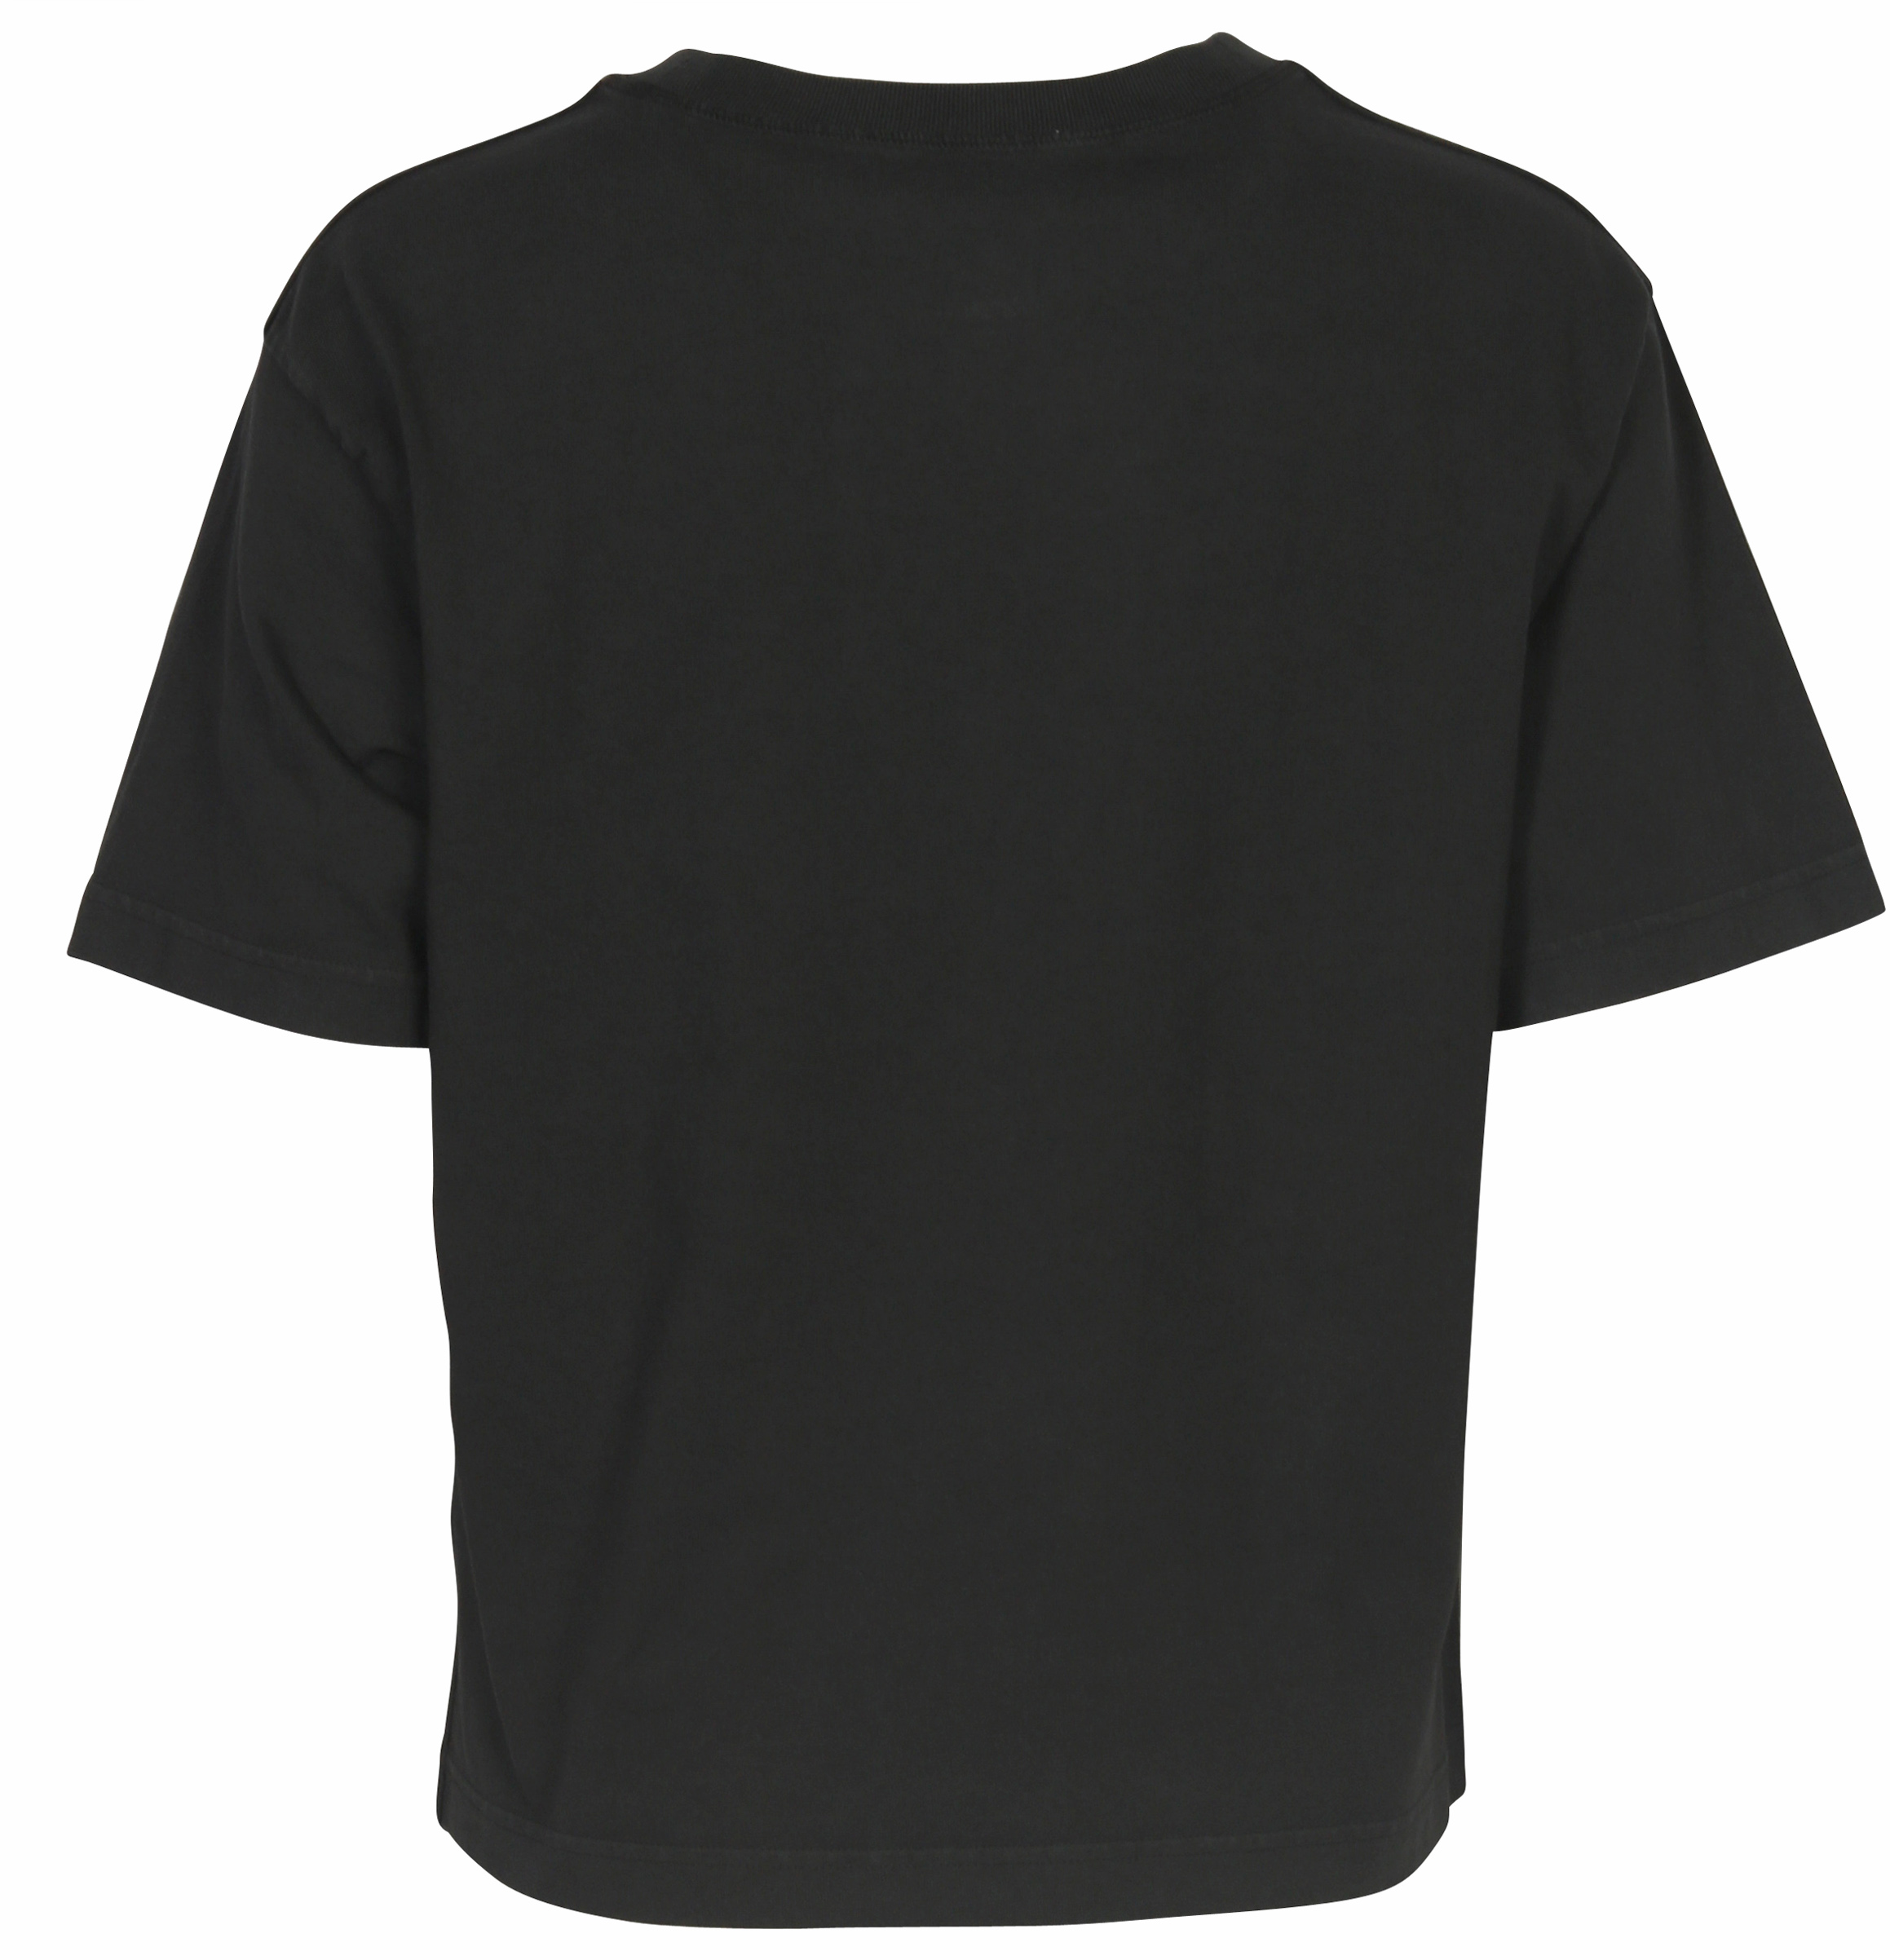 Acne Studios T-Shirt Edie Stamp Black S